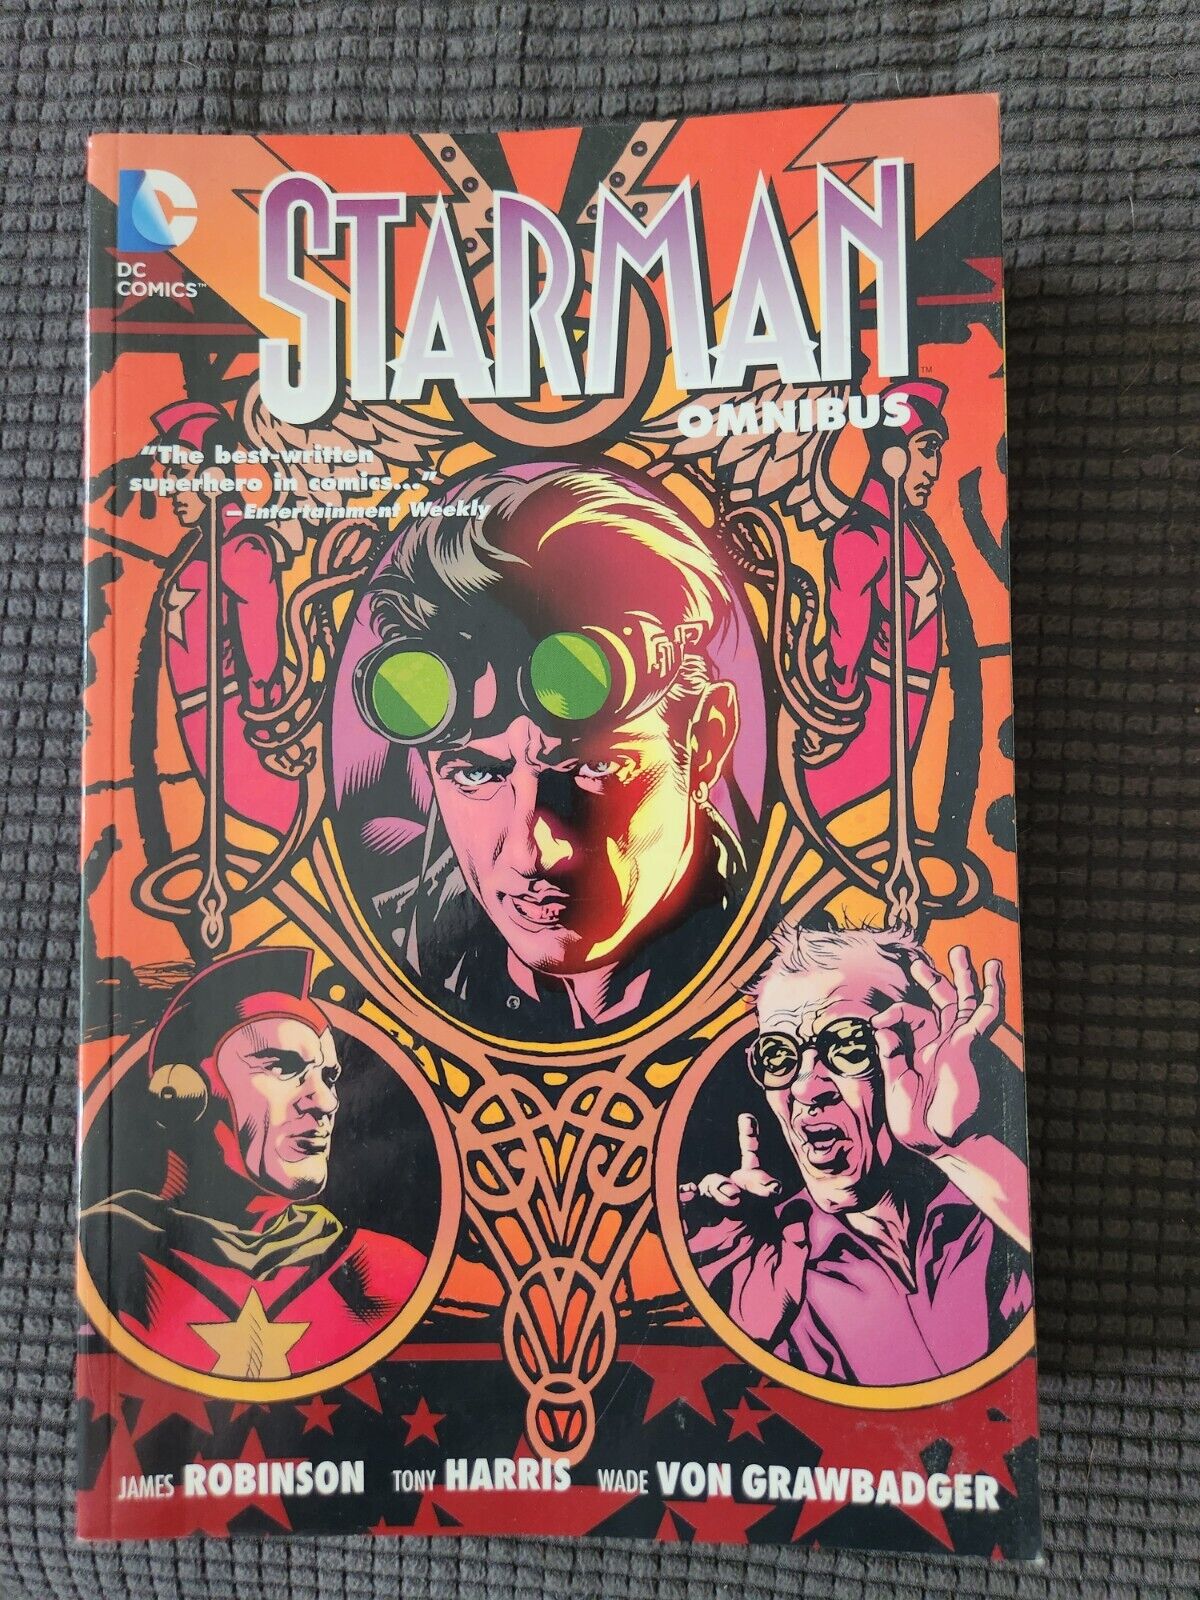 The Starman Omnibus #1 (DC Comics July 2012)